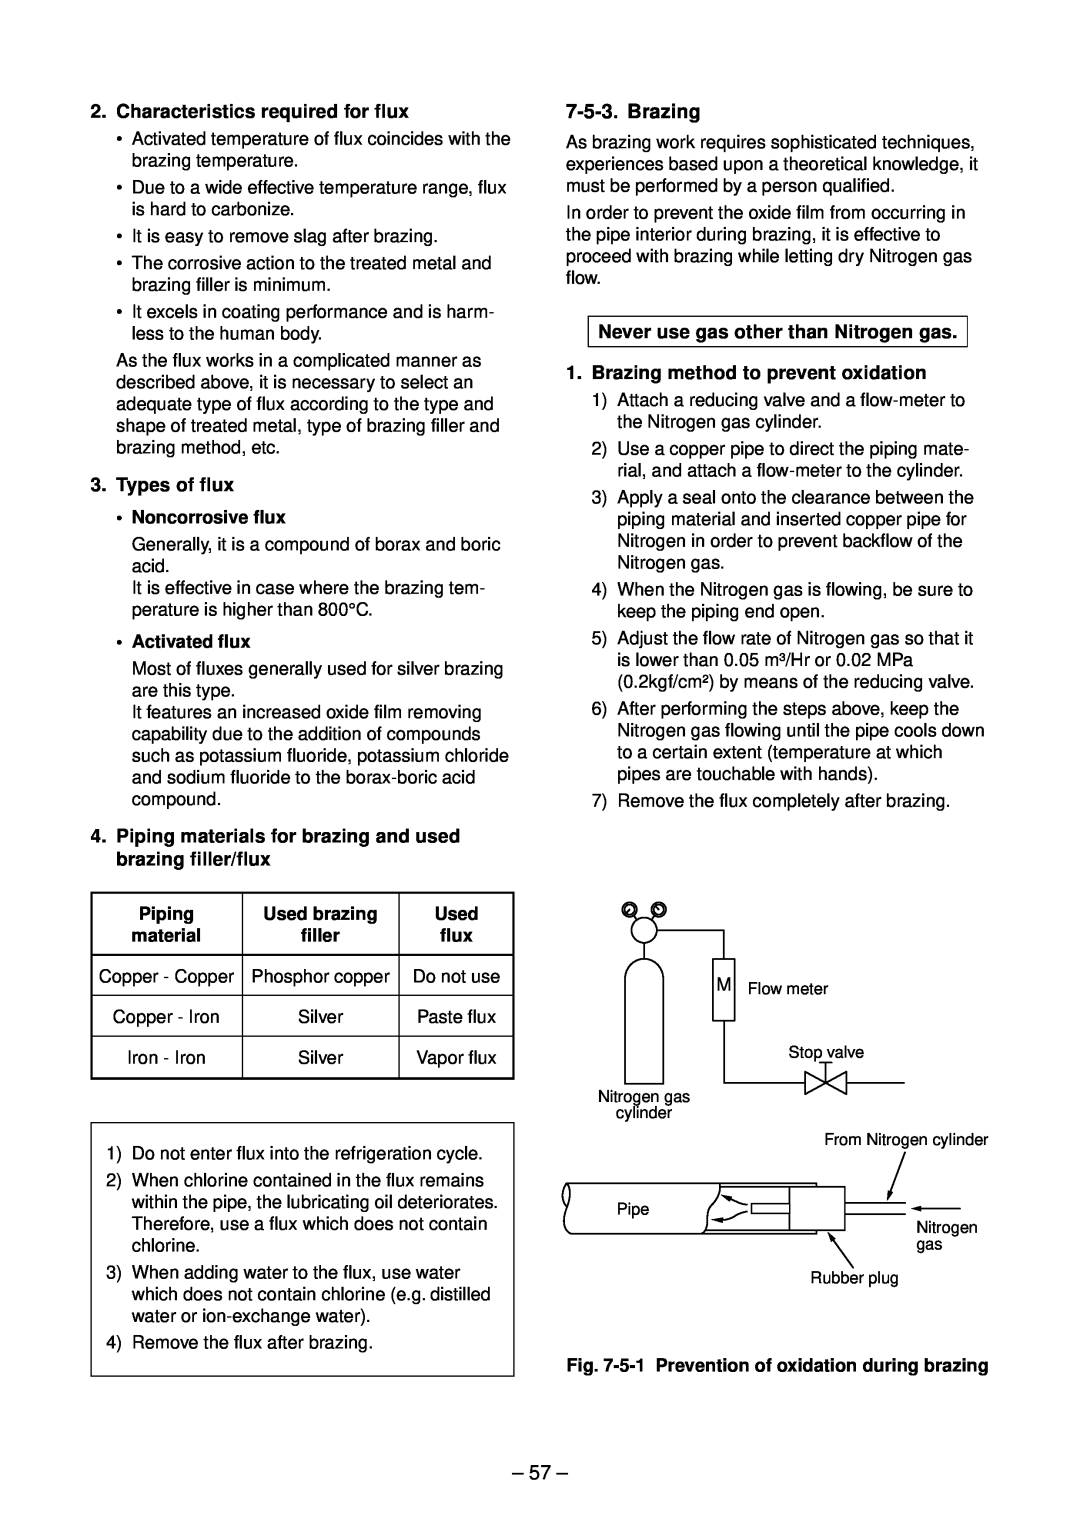 Toshiba RAV-SM1402UT-E, RAV-SM1102UT-E service manual Brazing, 57, •Noncorrosive flux, •Activated flux, Piping, Used brazing 